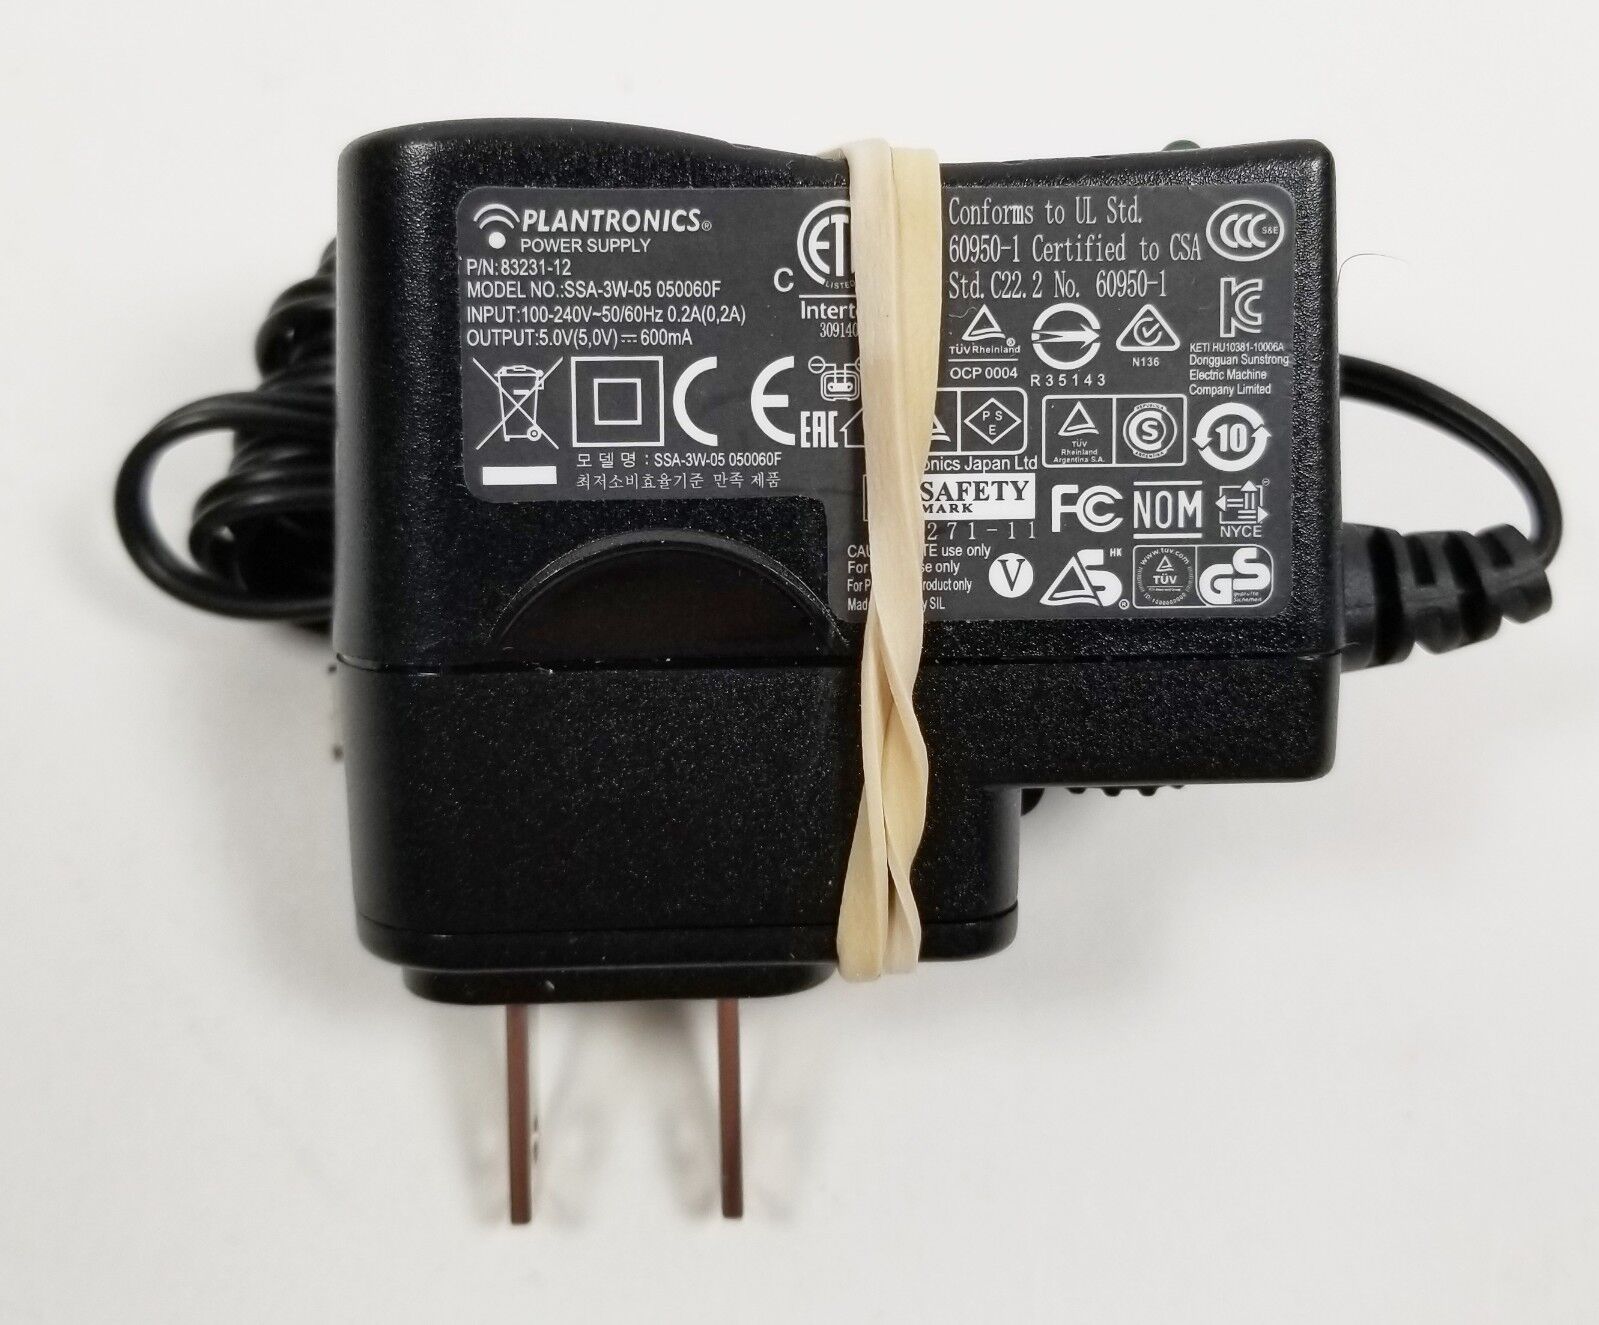 PLANTRONICS 18％OFF AC SEAL限定商品 Adapter Power Supply 83231-12 SSA-3W-05 Micro-USB 050060F